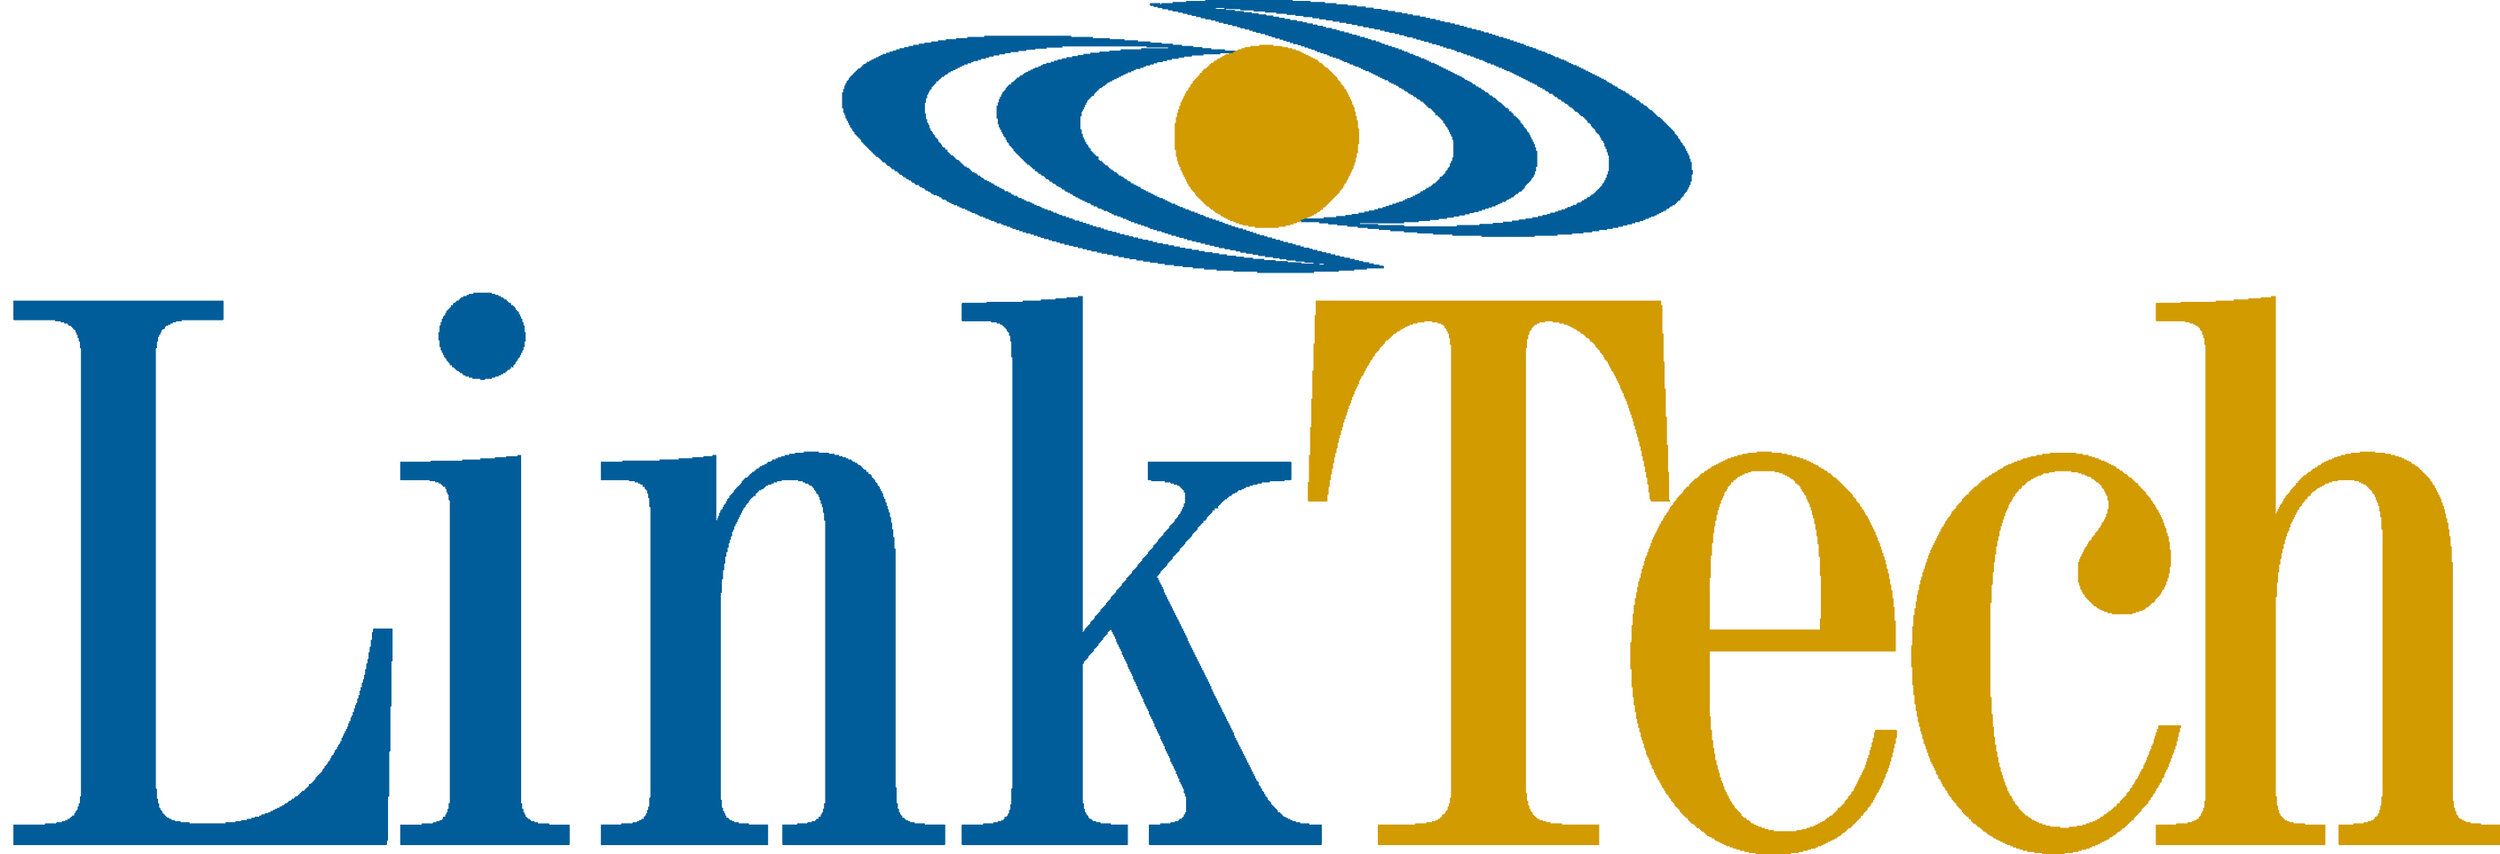 LinkTech logo.jpg